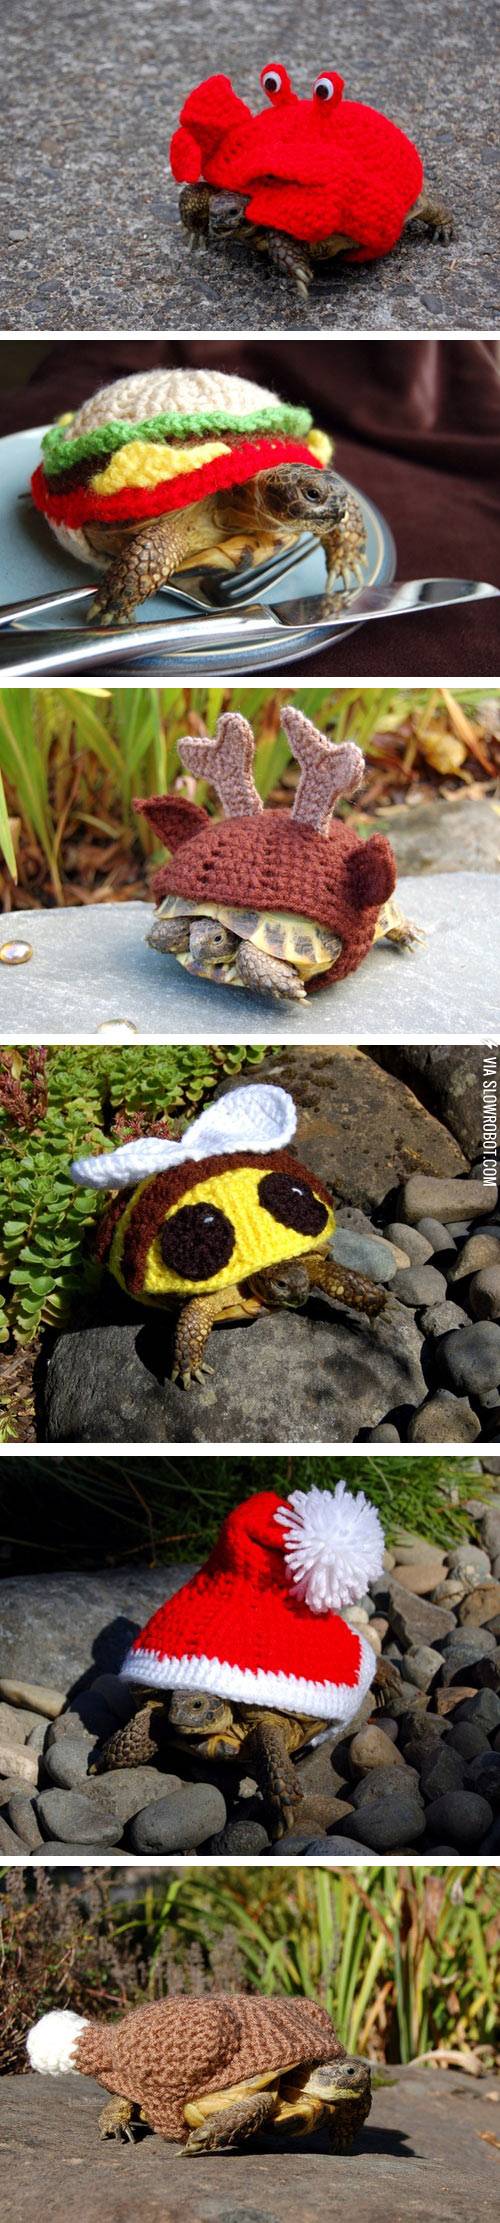 Turtles+in+costumes.